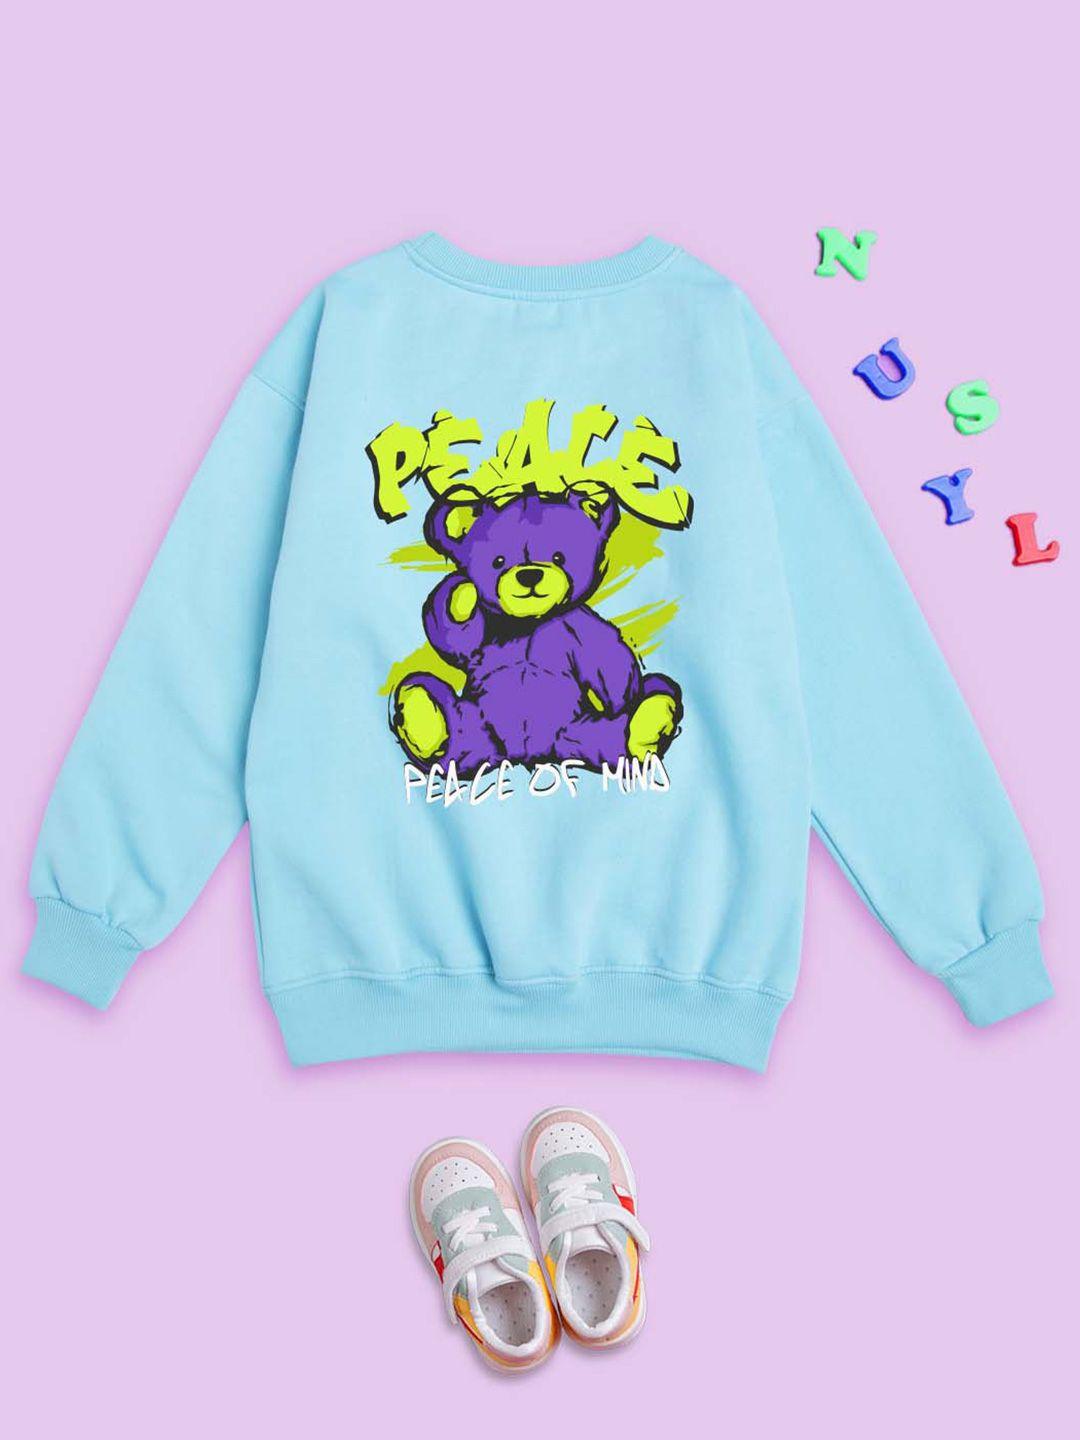 nusyl kids graphic printed sweatshirt